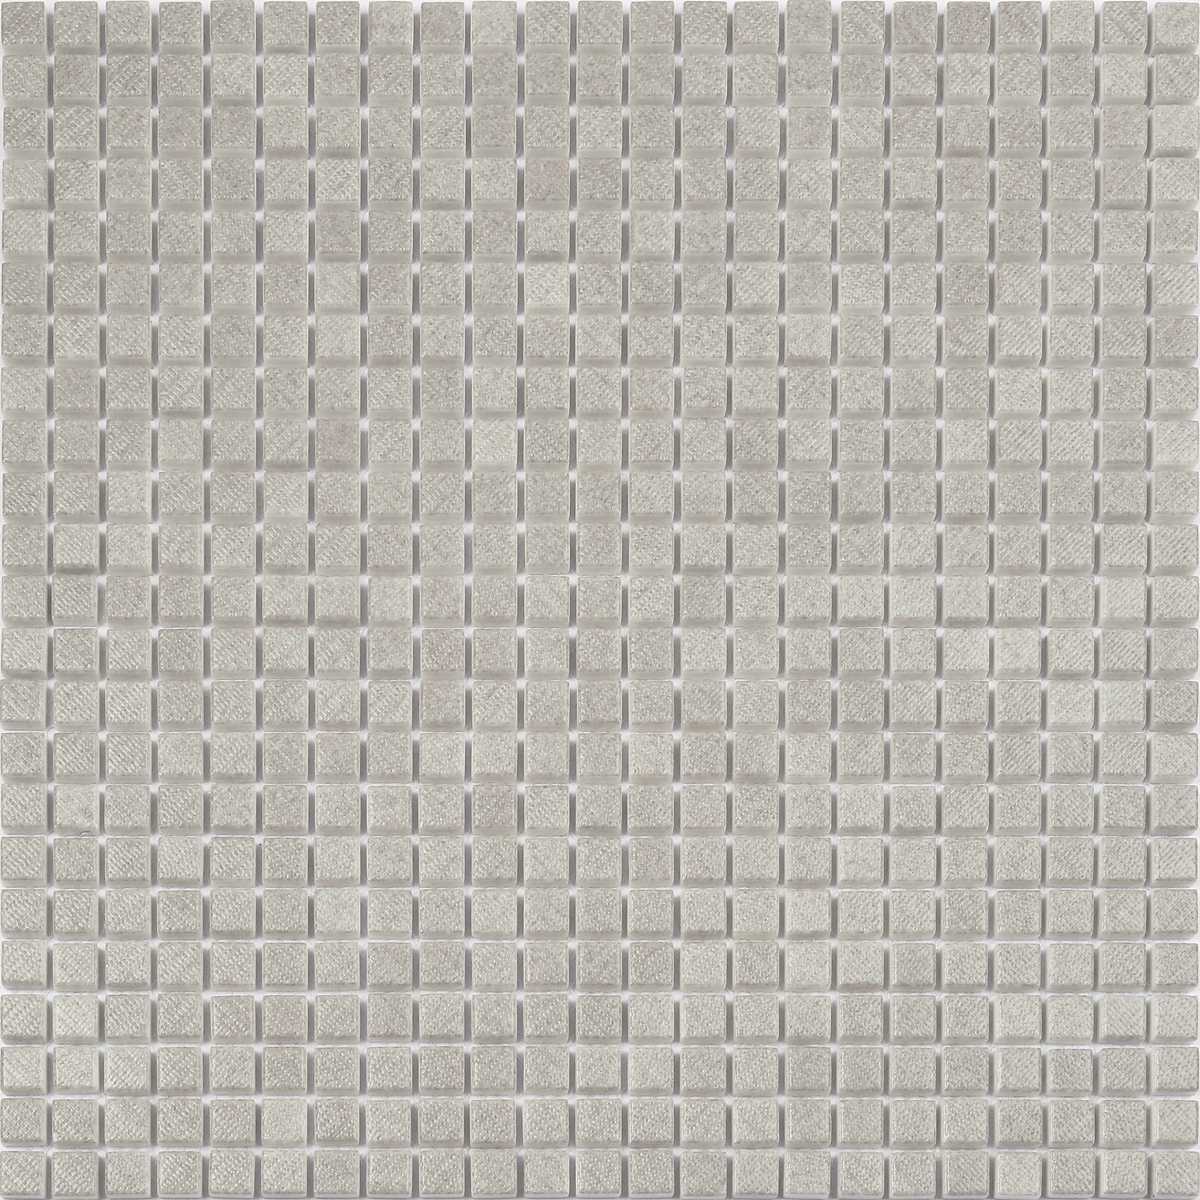 Kitchen mosaic design tiles walls